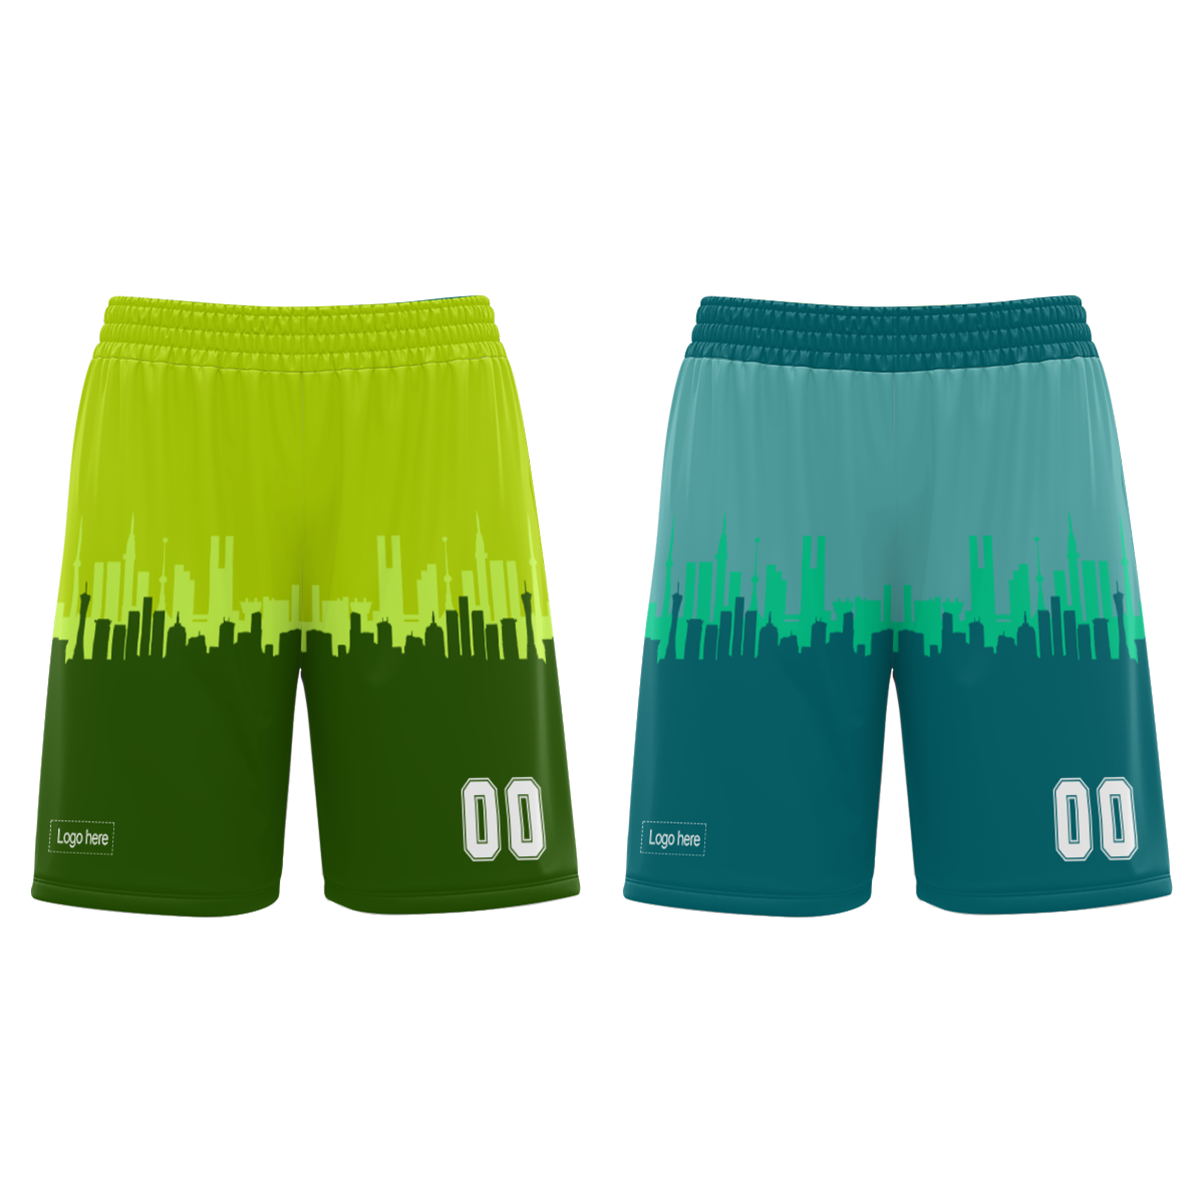 custom-printed-men-latest-basketball-jersey-design-sports-jersey-sublimation-comfortable-custom-basketball-wear-uniform-at-cj-pod-7